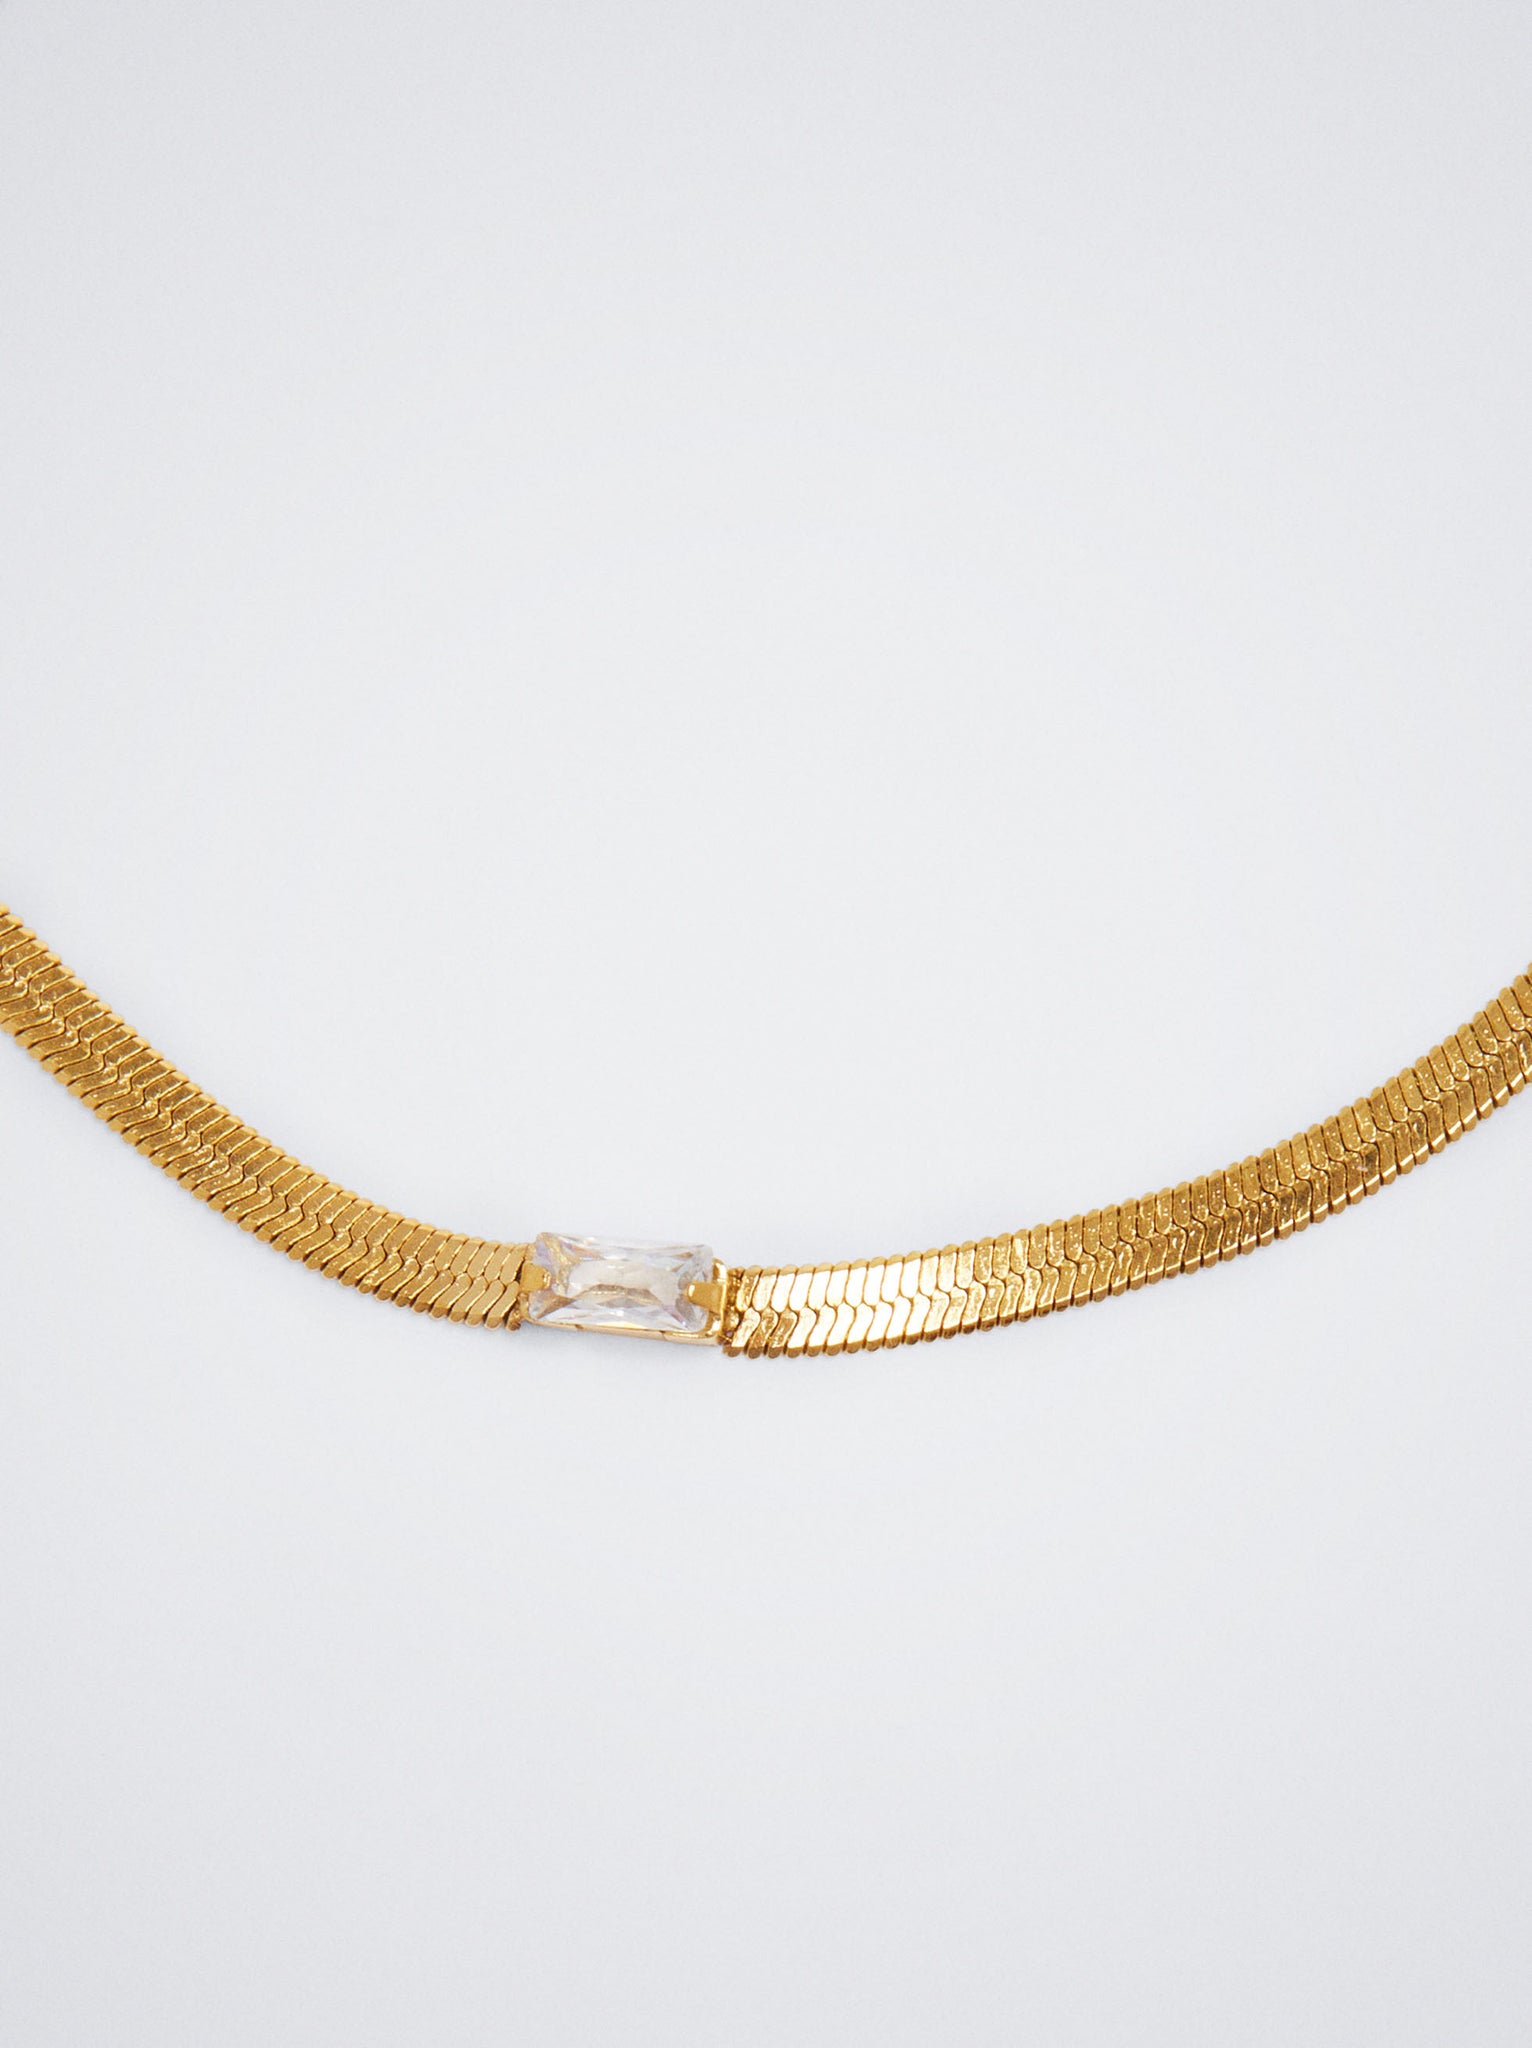 Steel Golden Bracelet